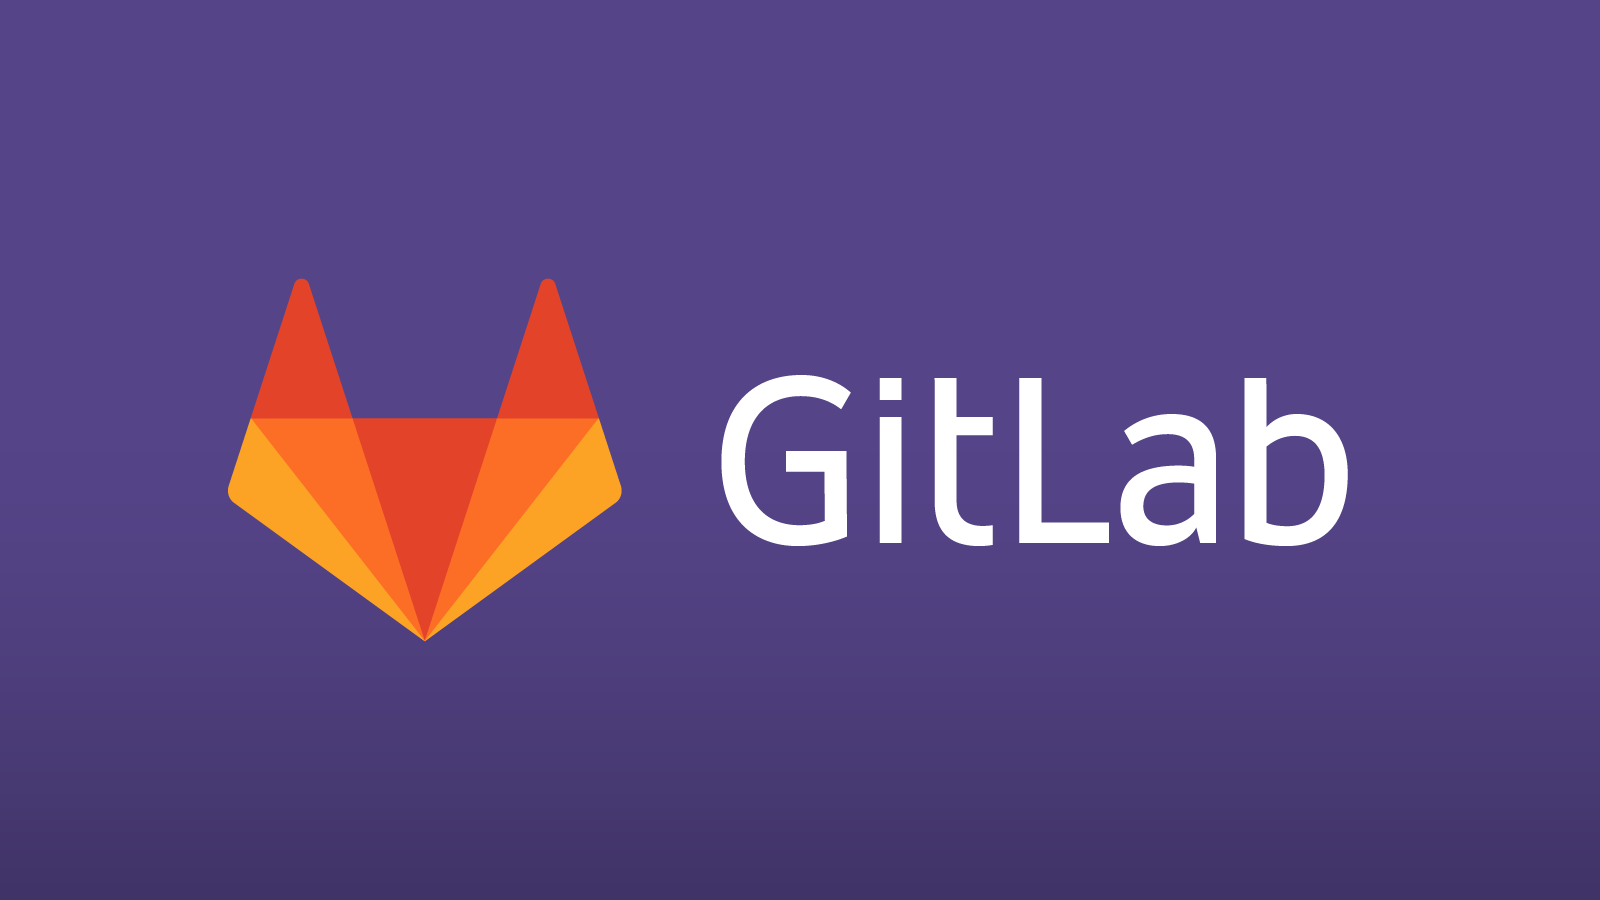 GitLab Raises $4M Series A Round From Khosla Ventures For Its Open Source Collaboration Platform | TechCrunch